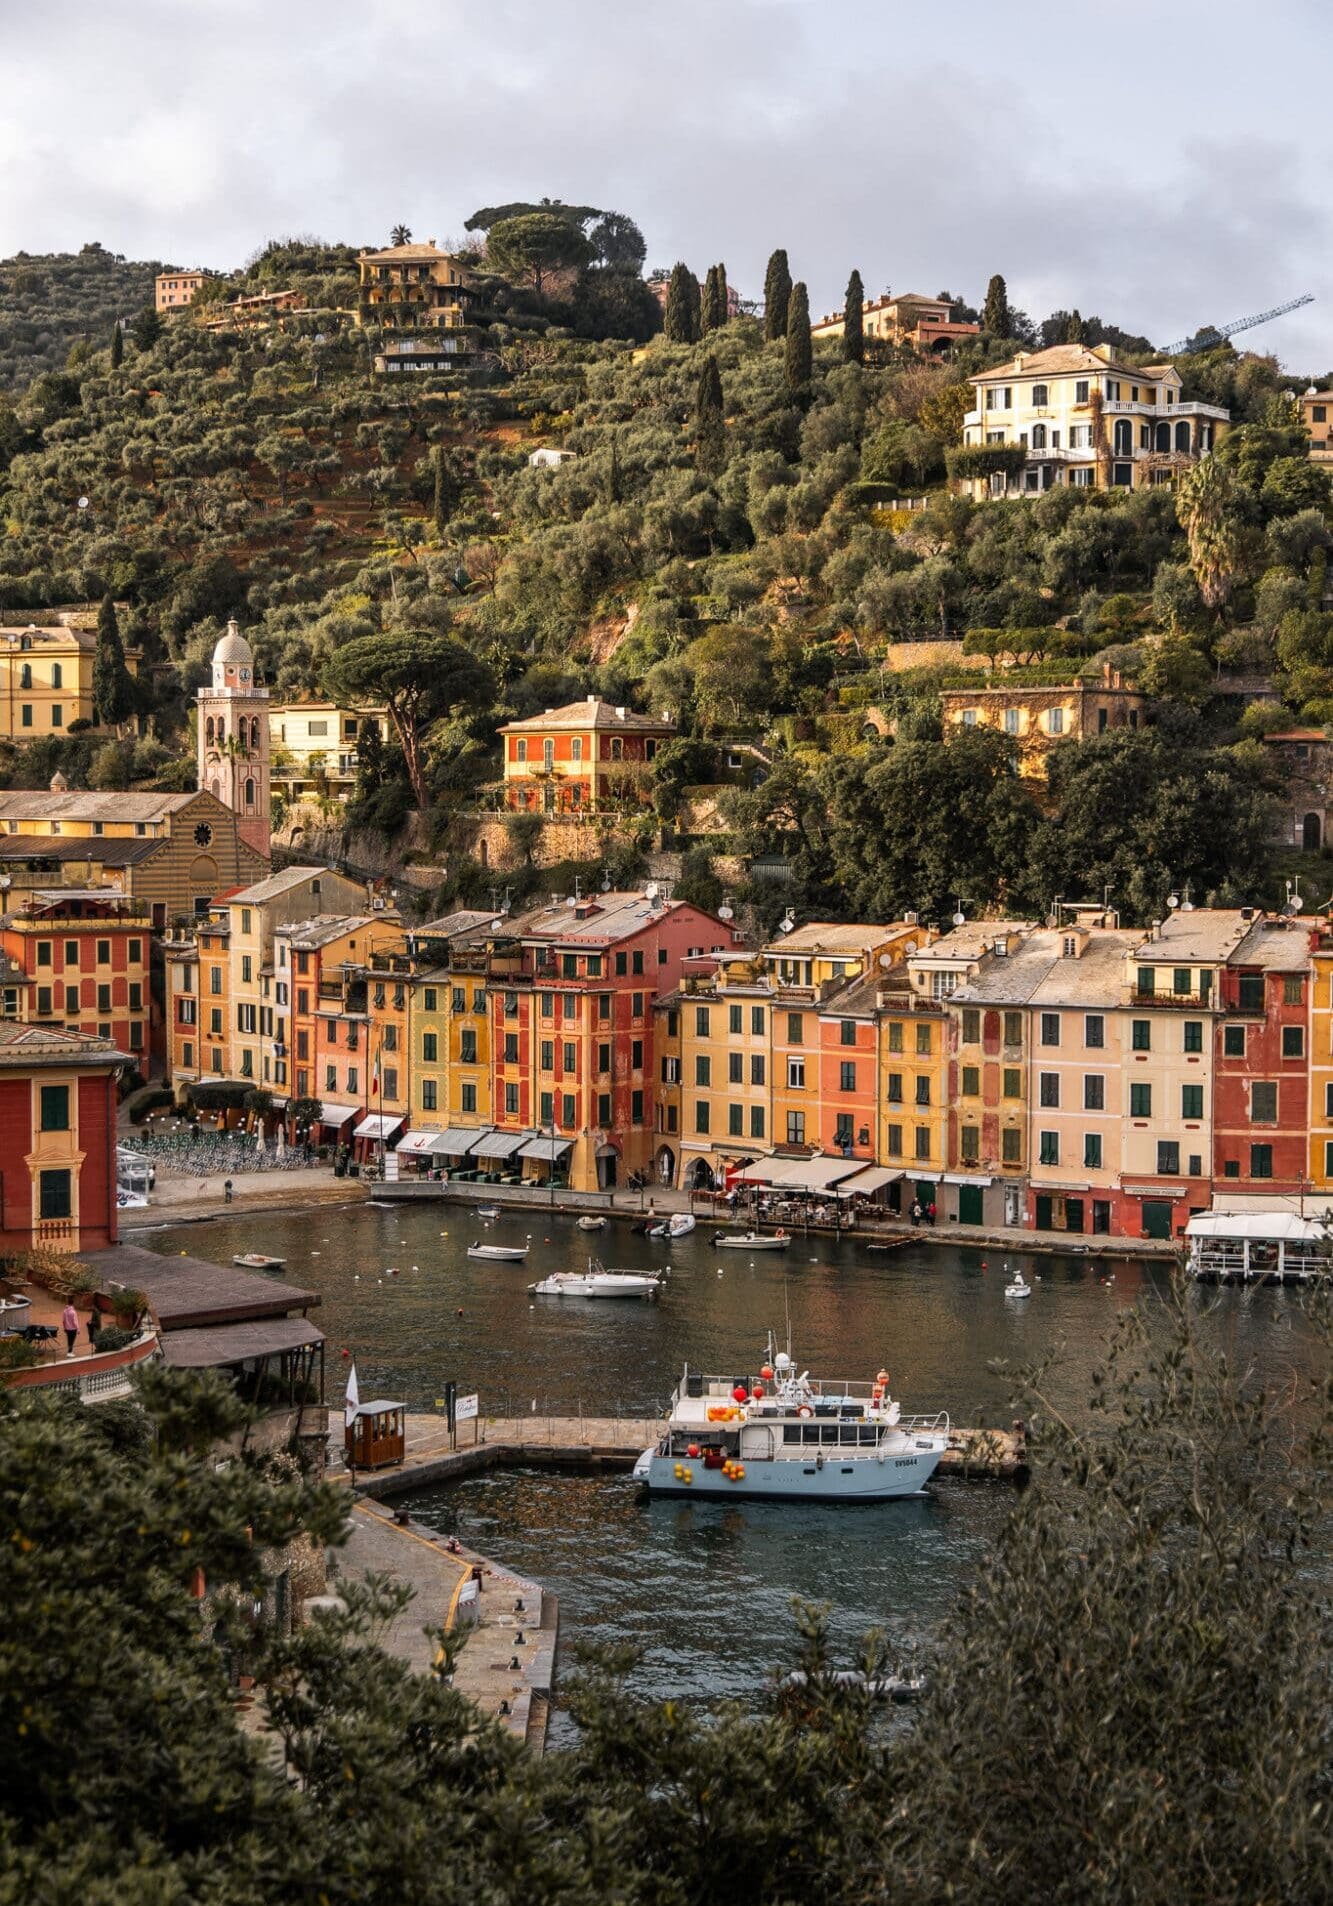 Portofino Liguria Italy Day trips from Genoa